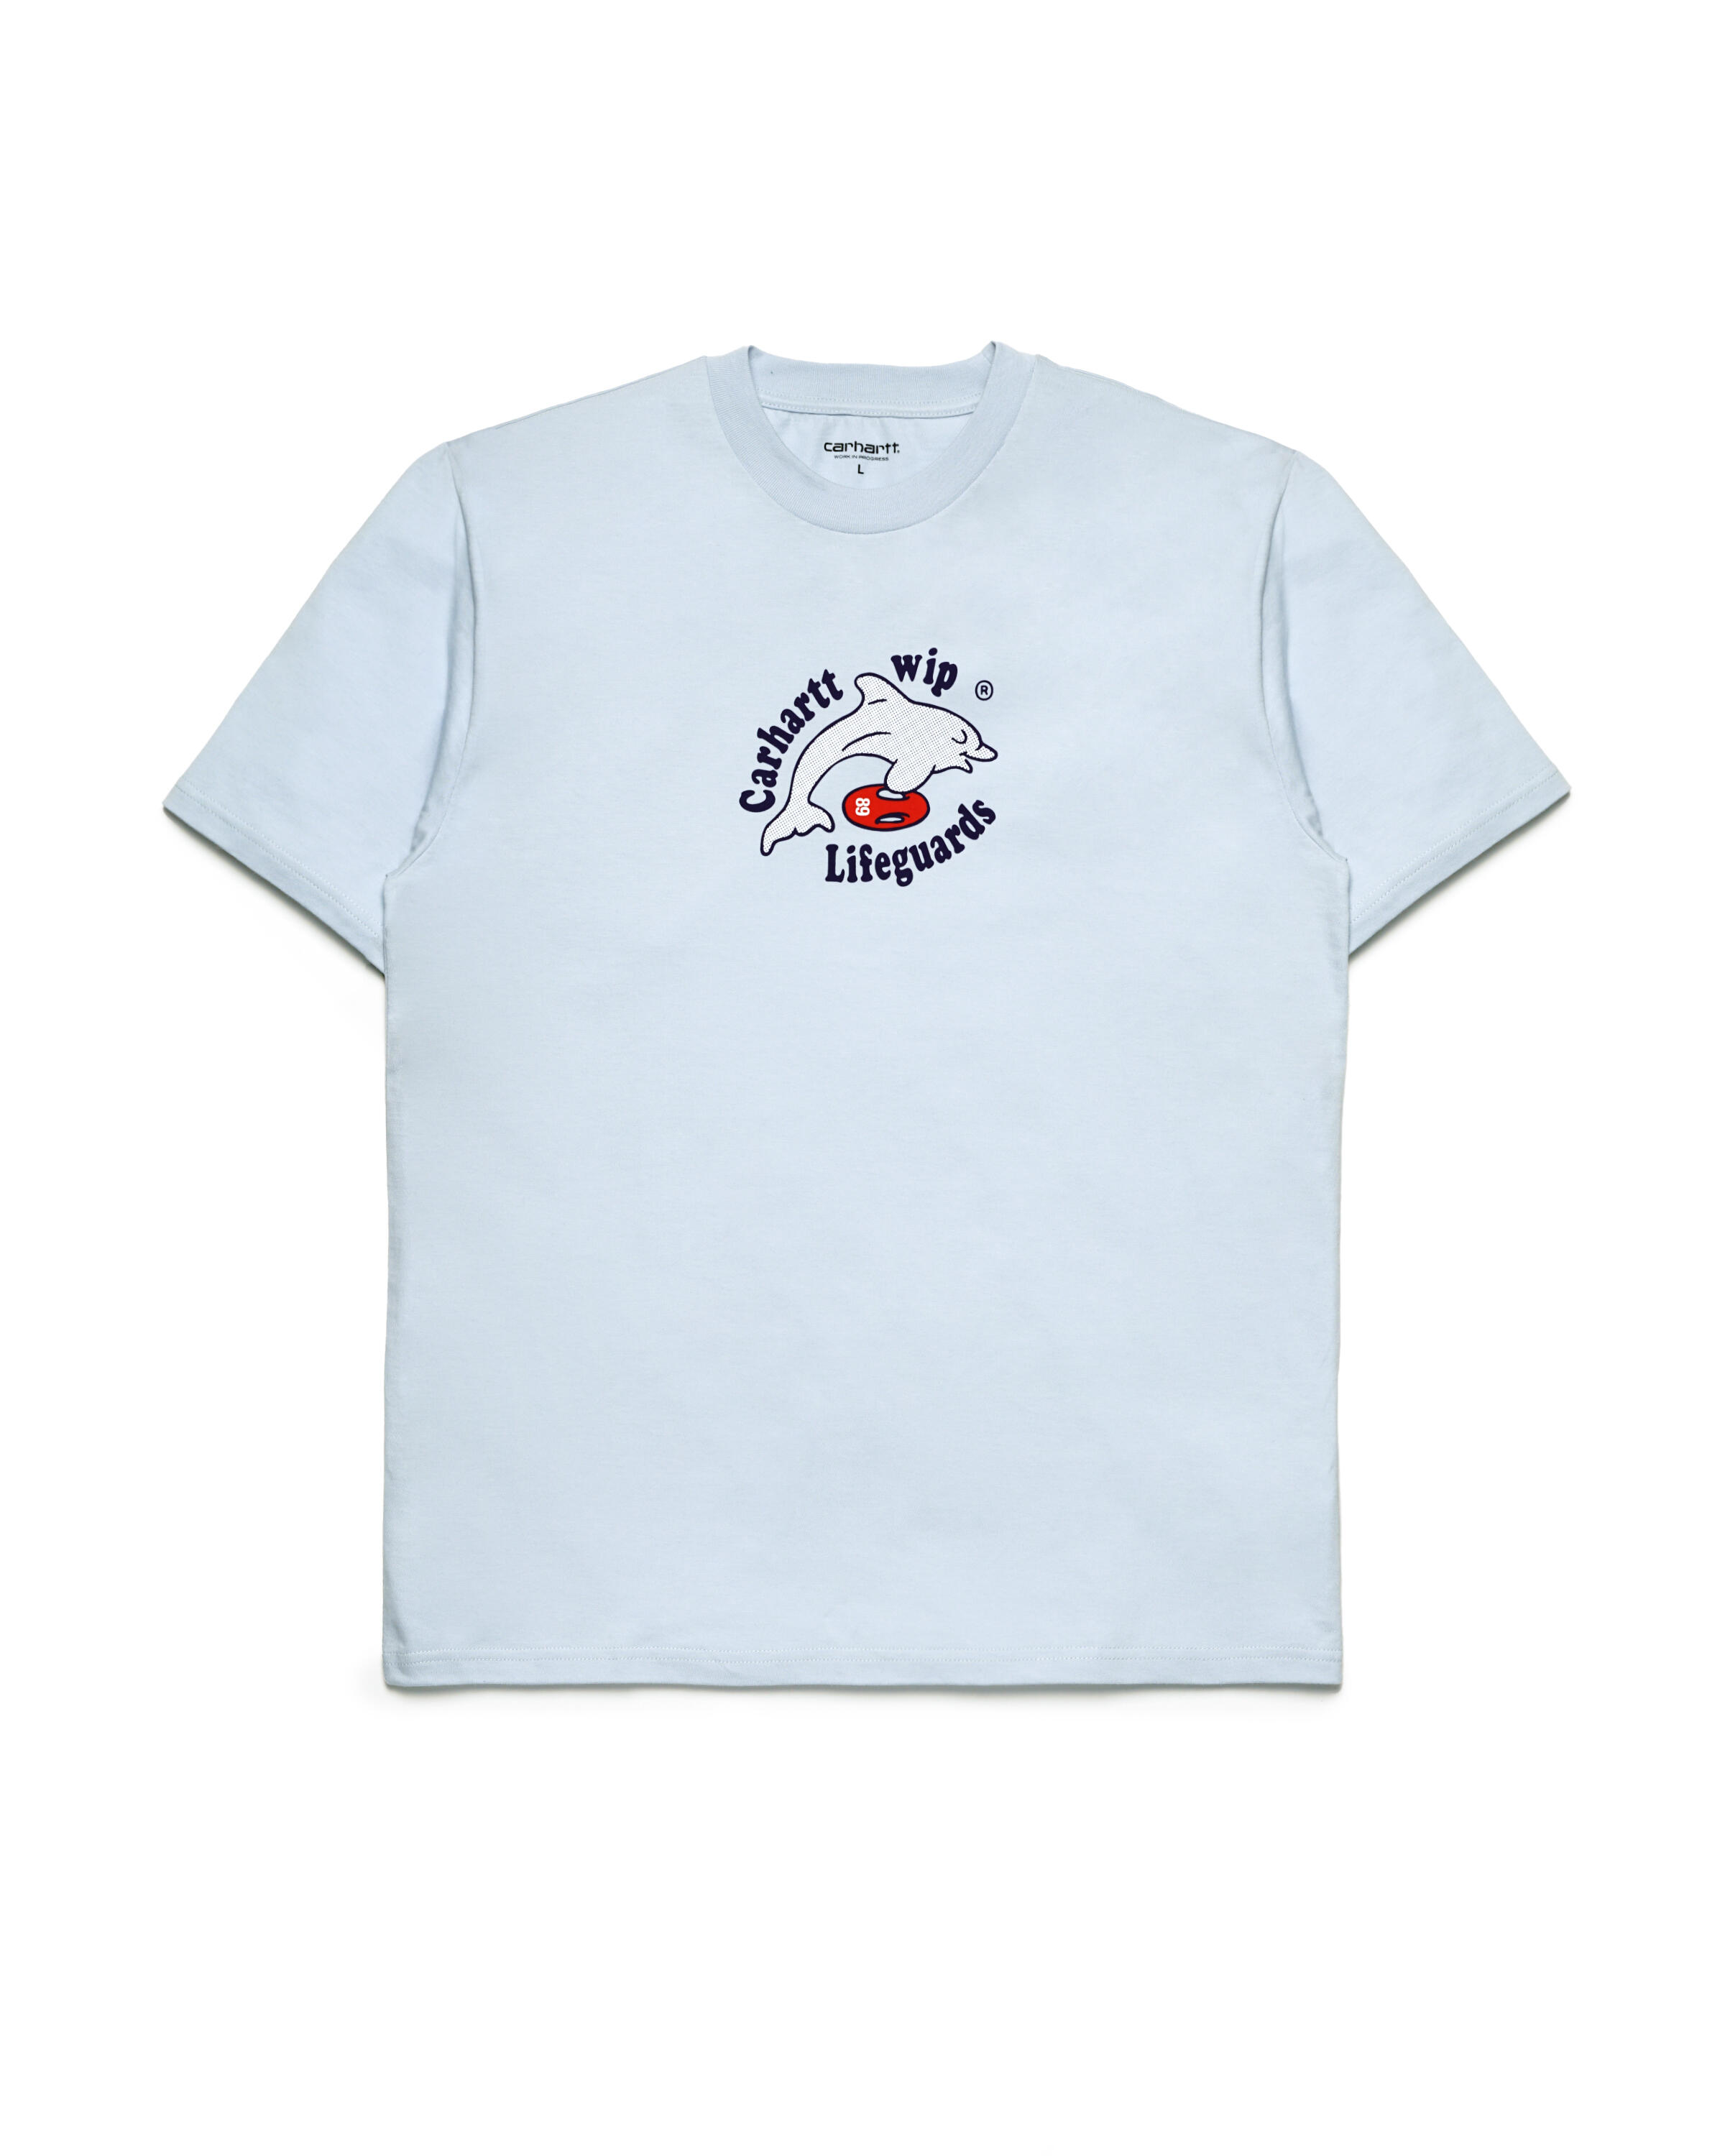 carhartt wip s/s lifeguards t-shirt